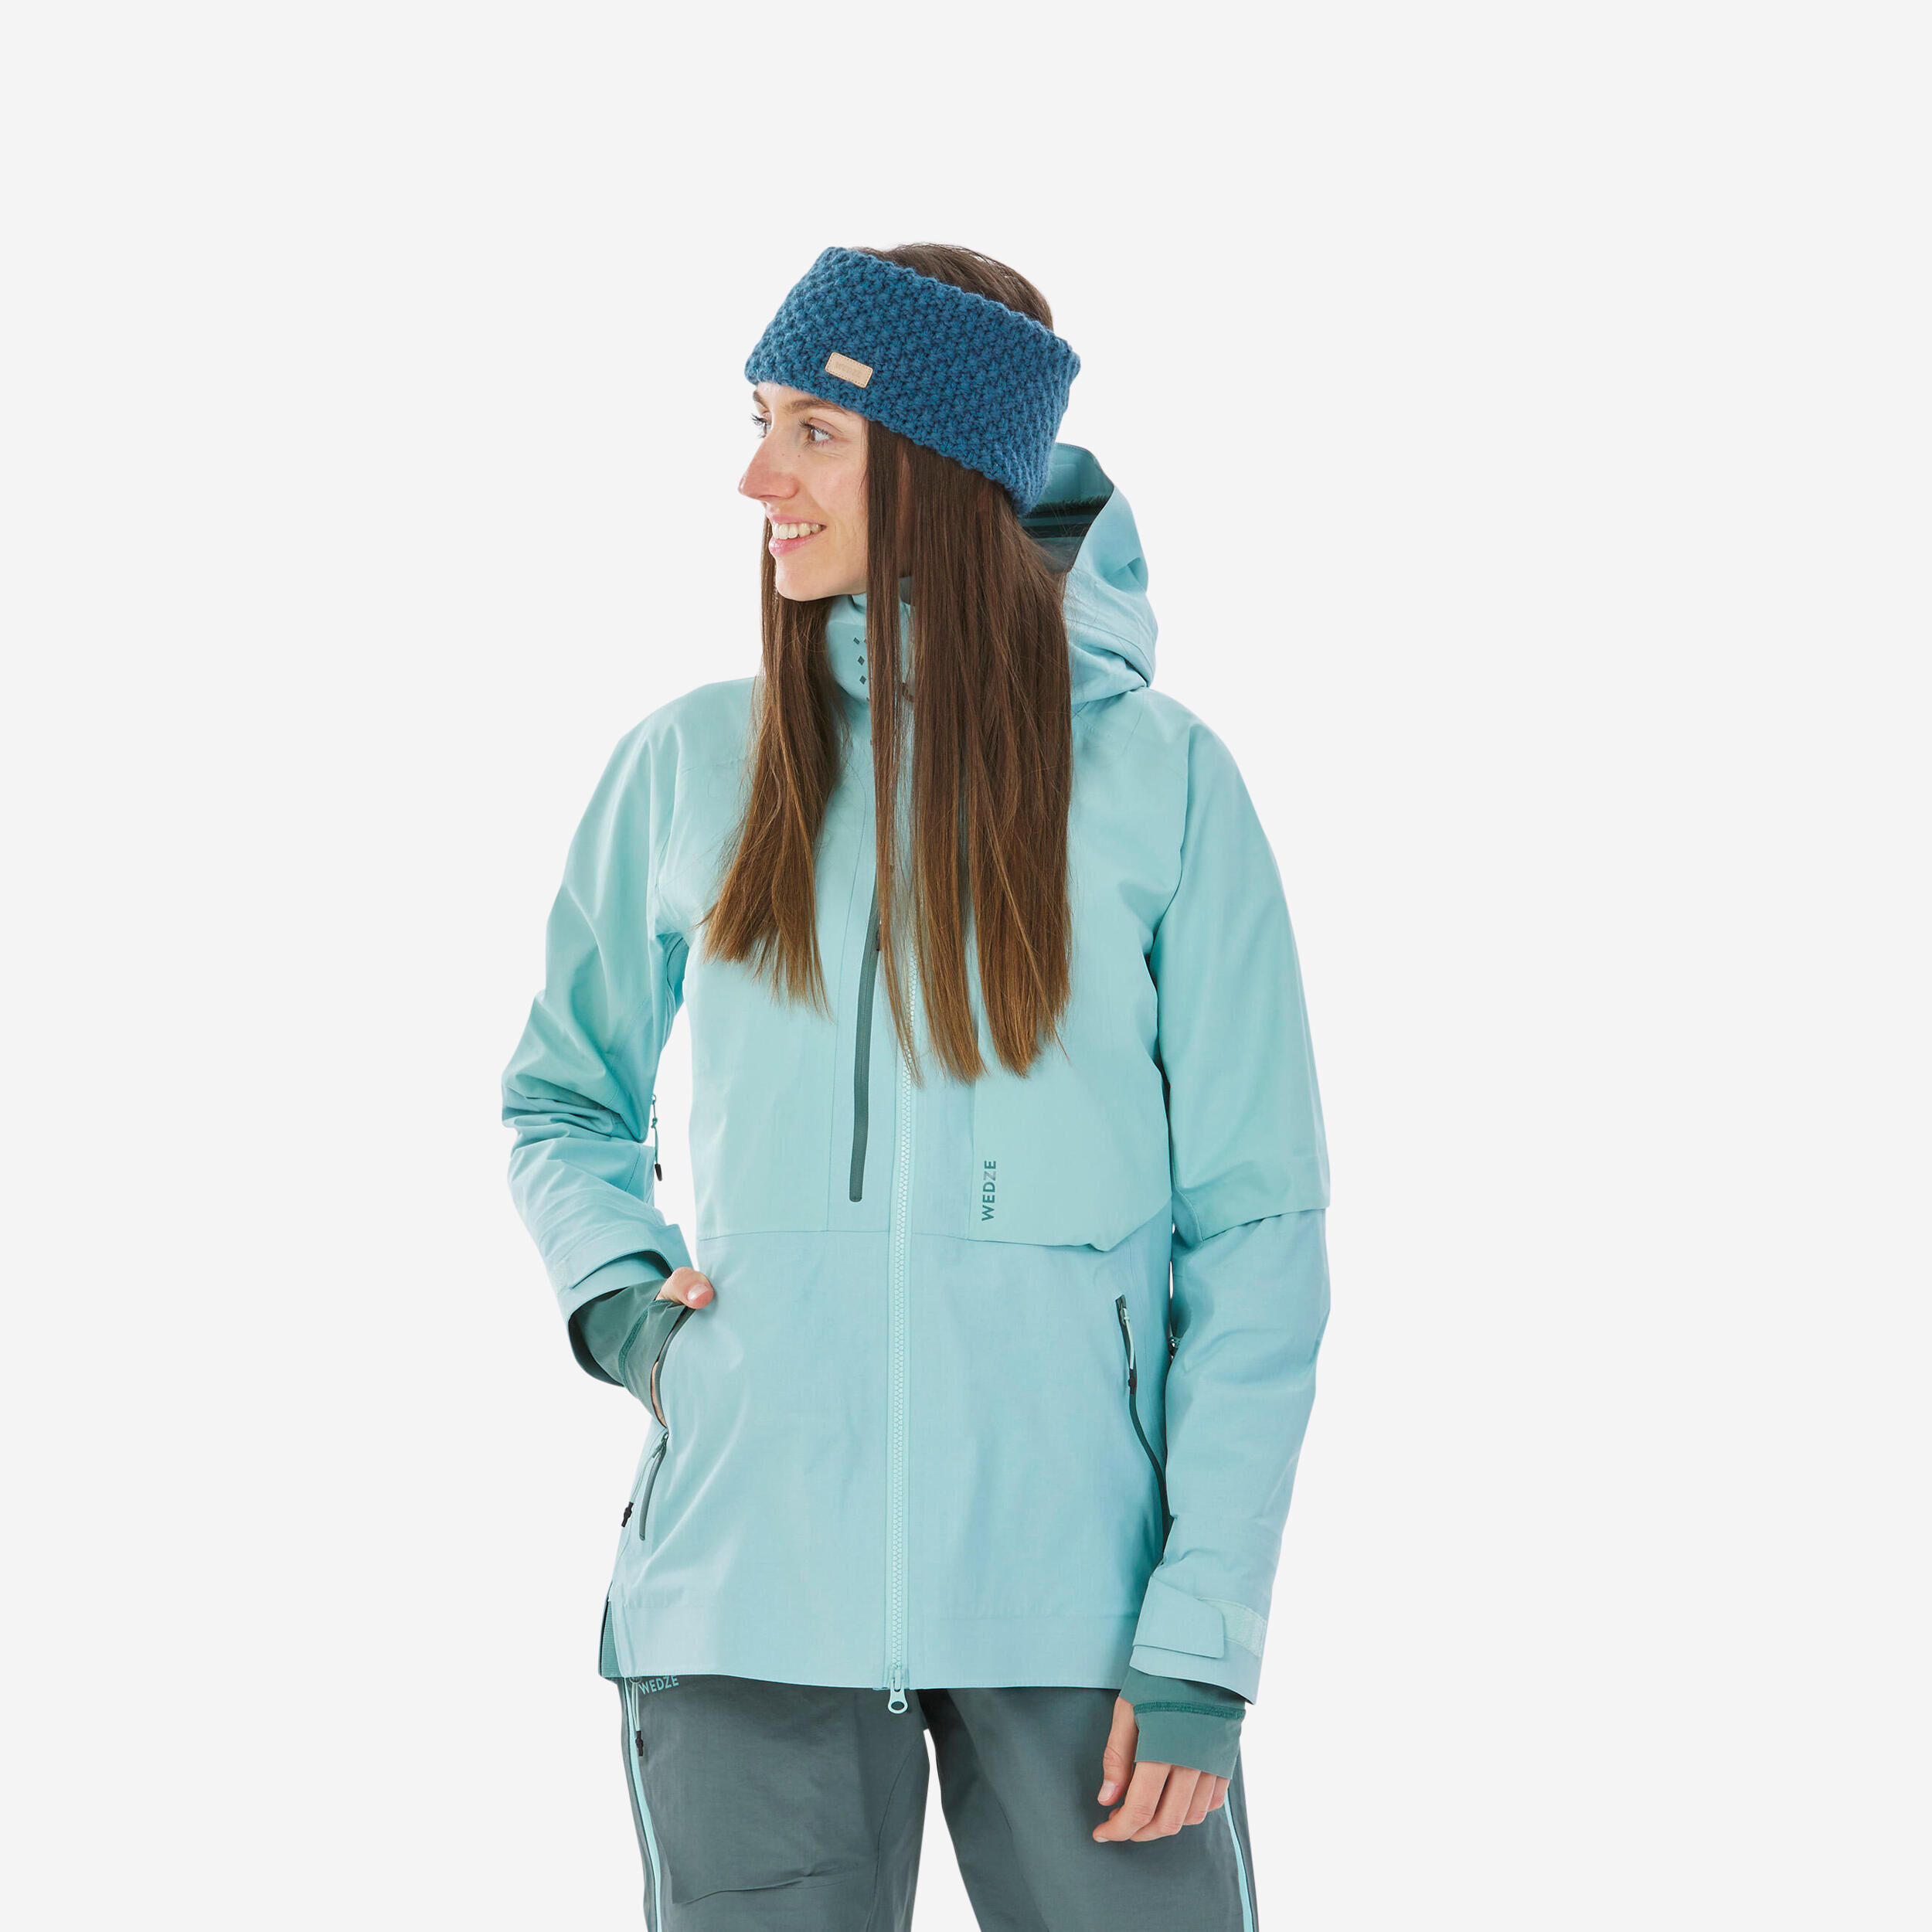 WEDZE Women's Ski Jacket FR900 Turquoise